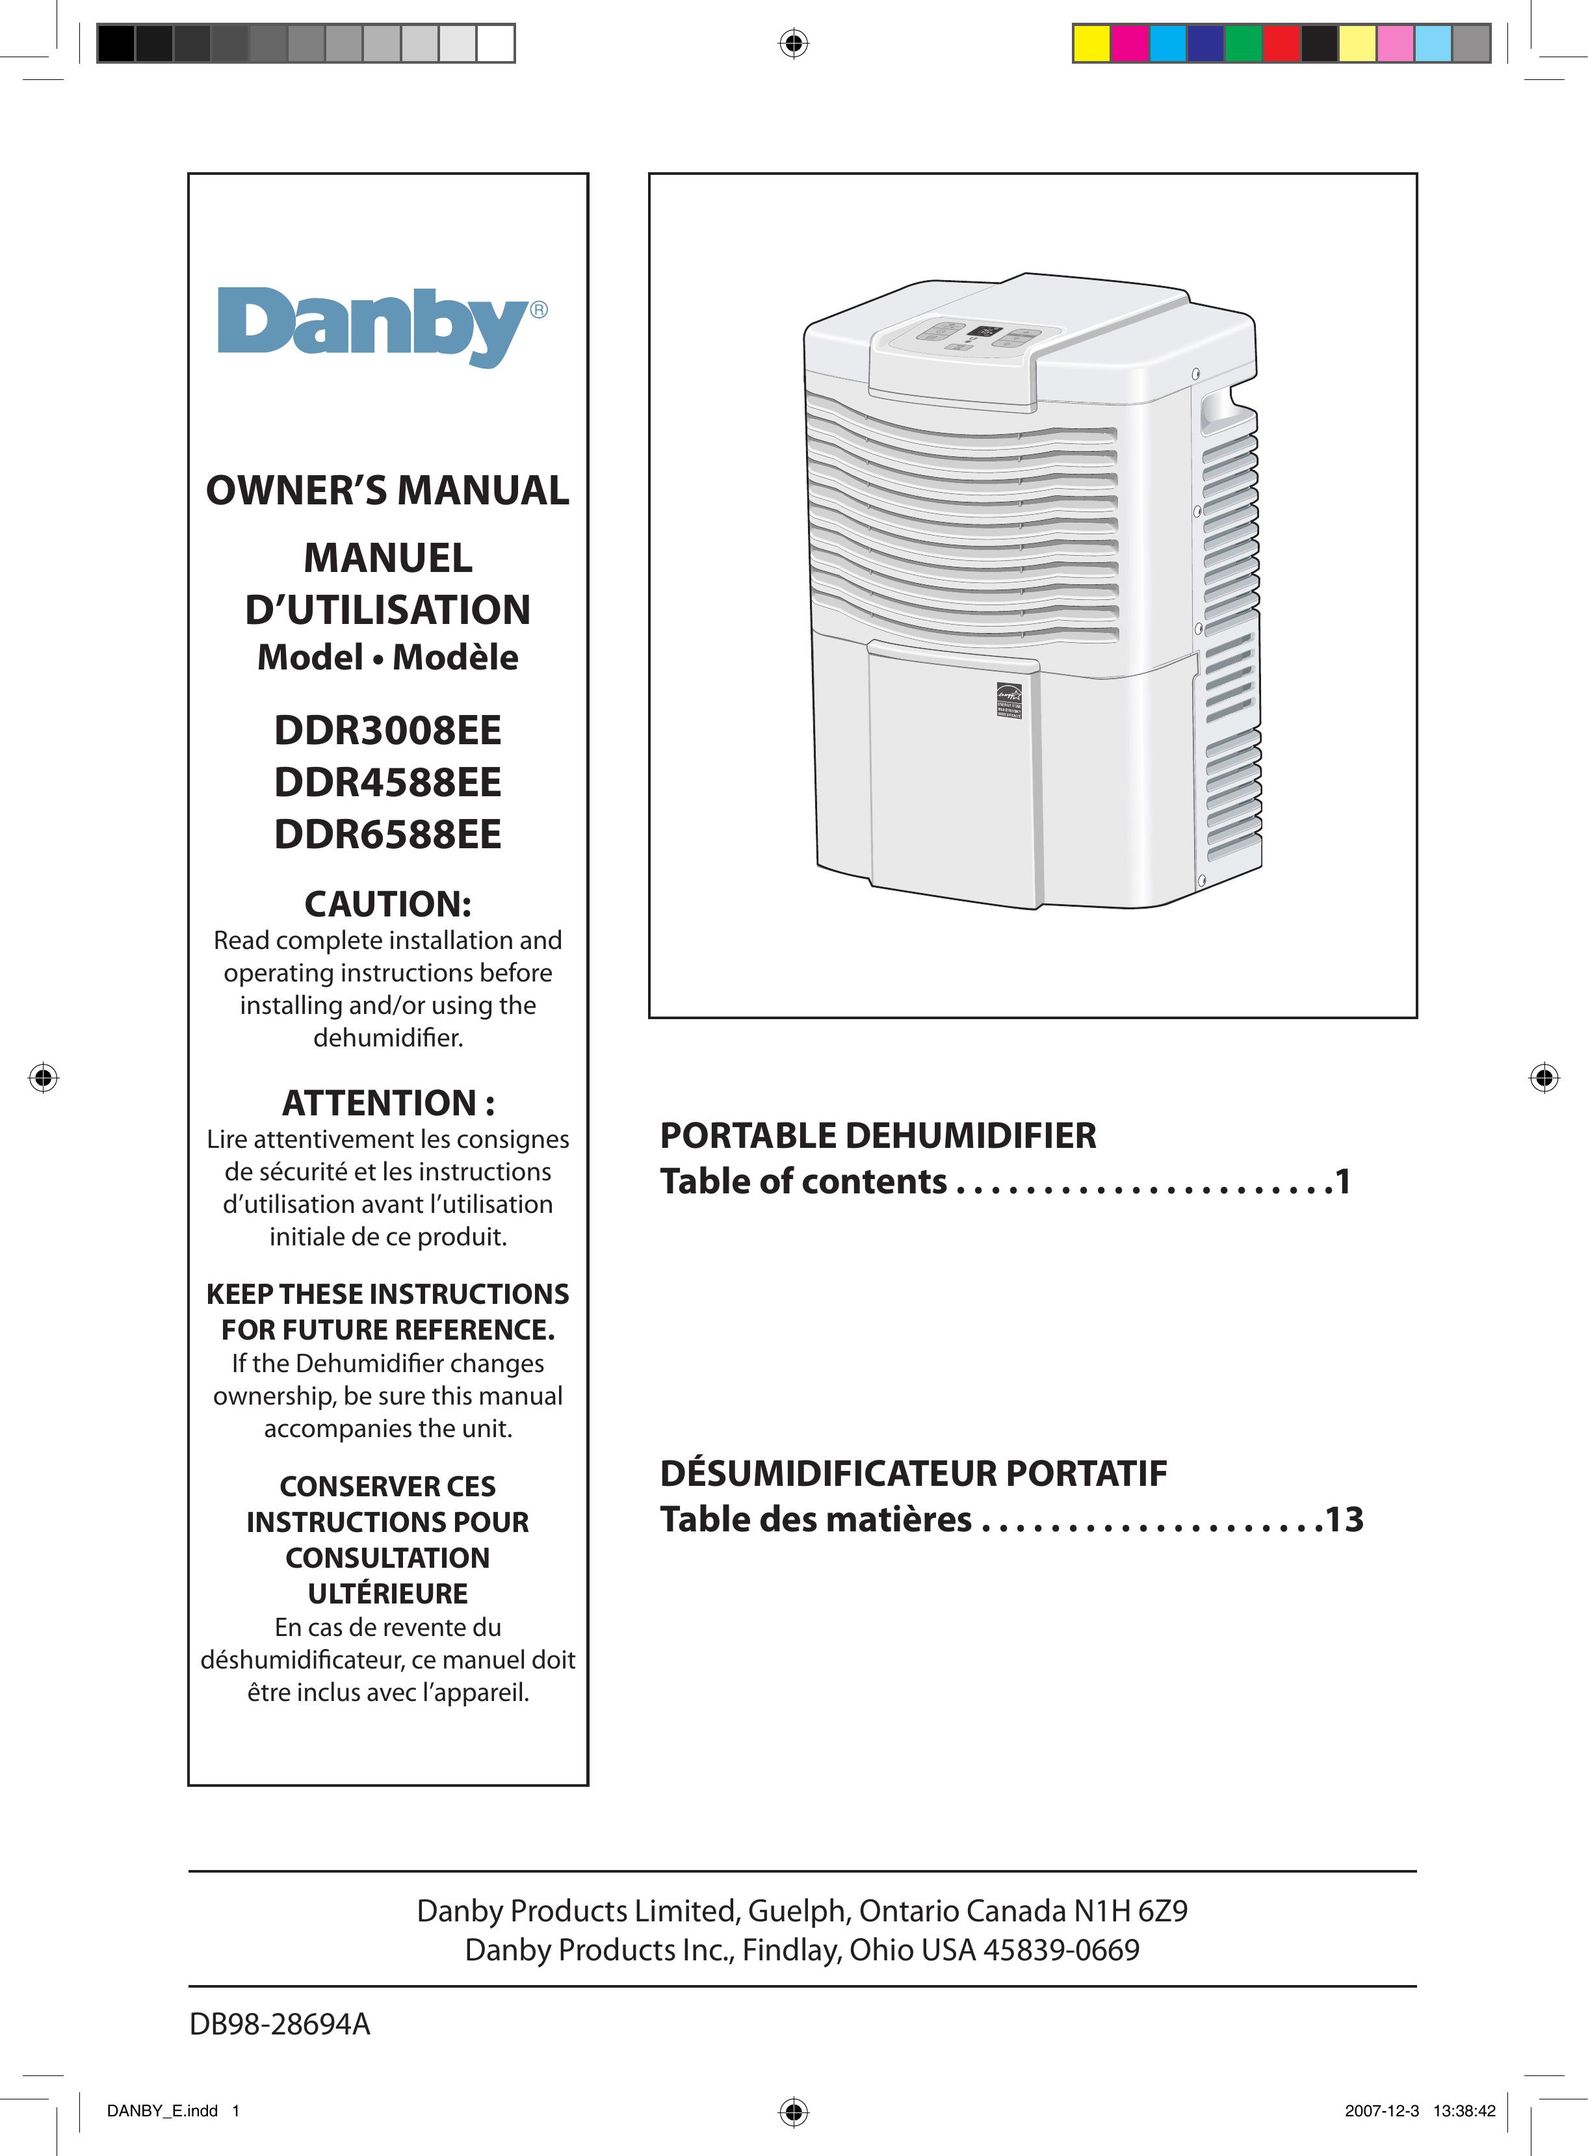 Danby DDR3008EE Dehumidifier User Manual